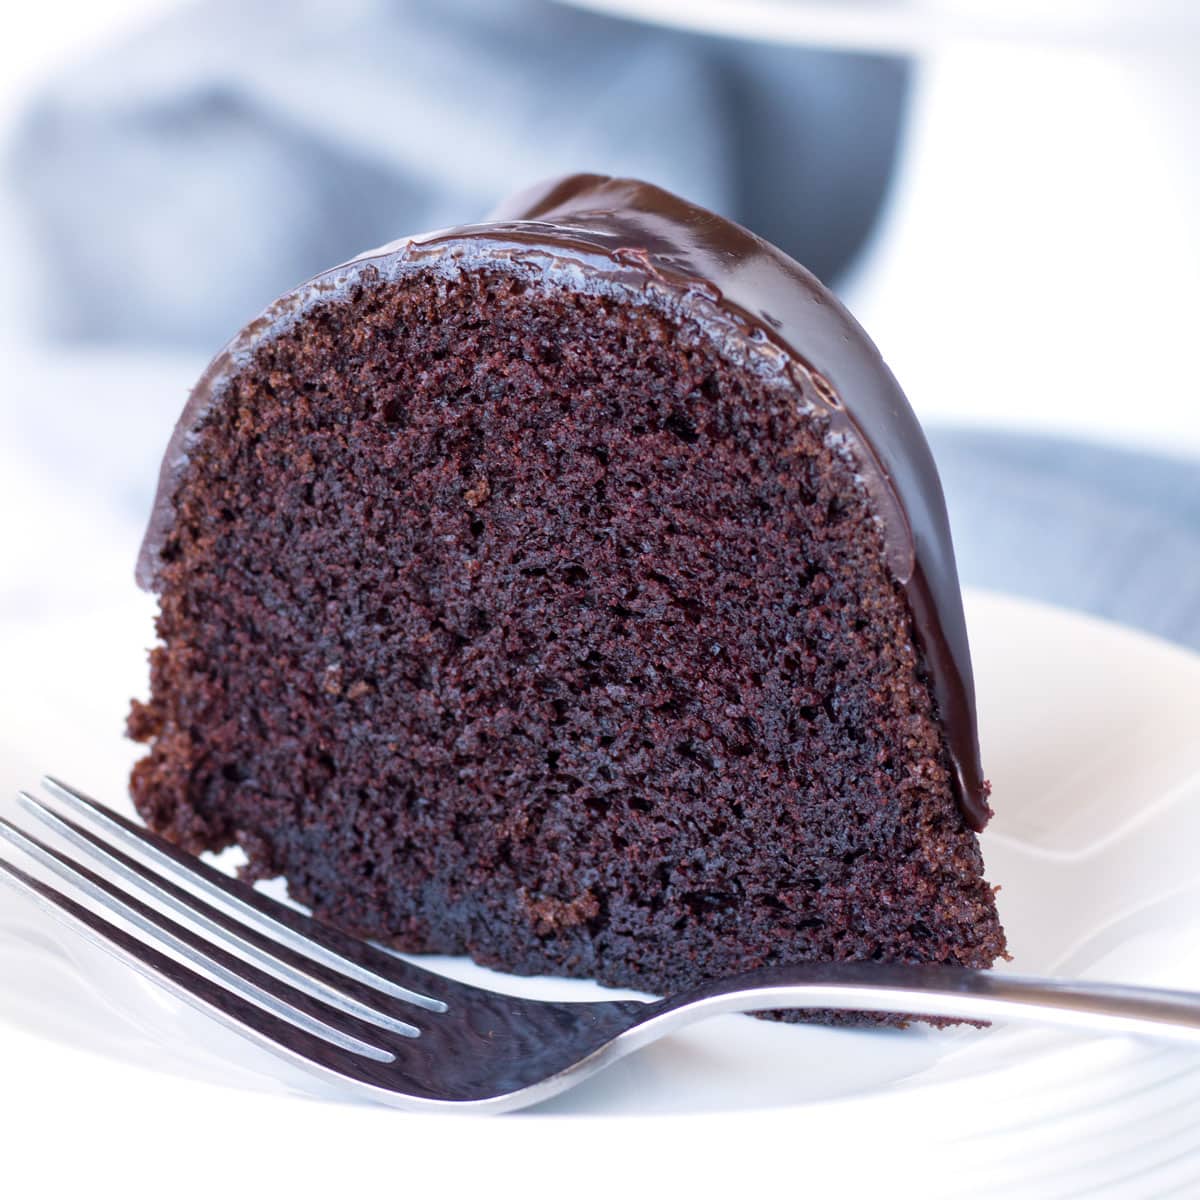 https://borrowedbites.com/wp-content/uploads/2020/07/Square-The-Perfect-Chocolate-Bundt-Cake.jpg